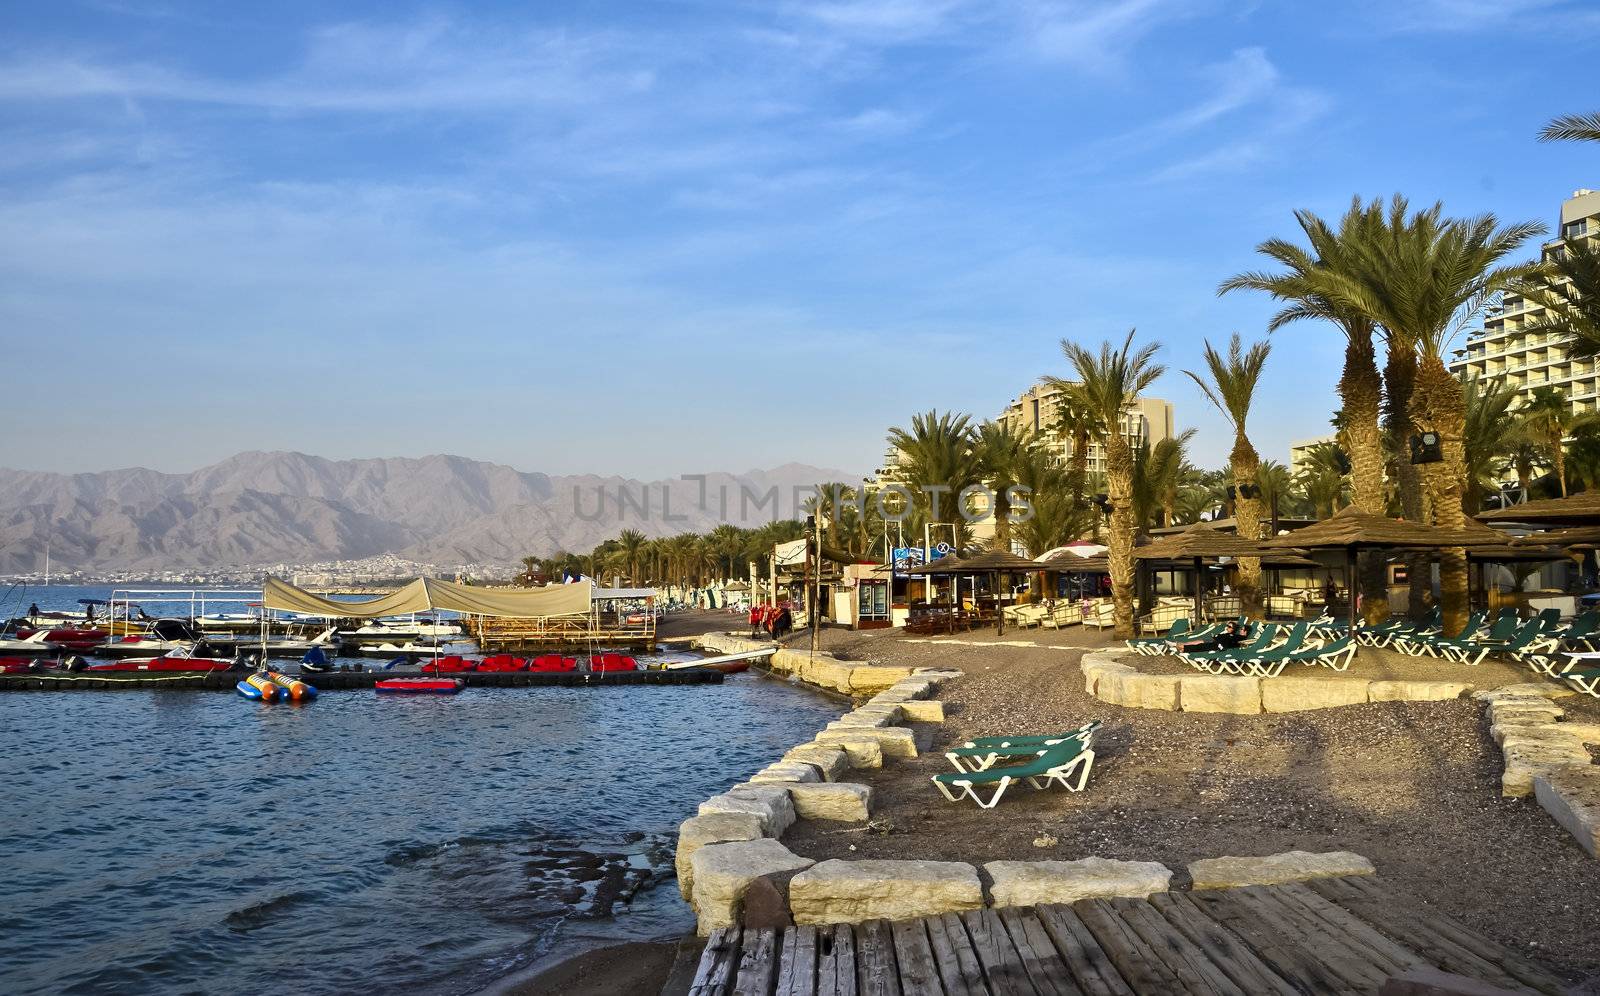 Eilat is a popular resort city in Israel